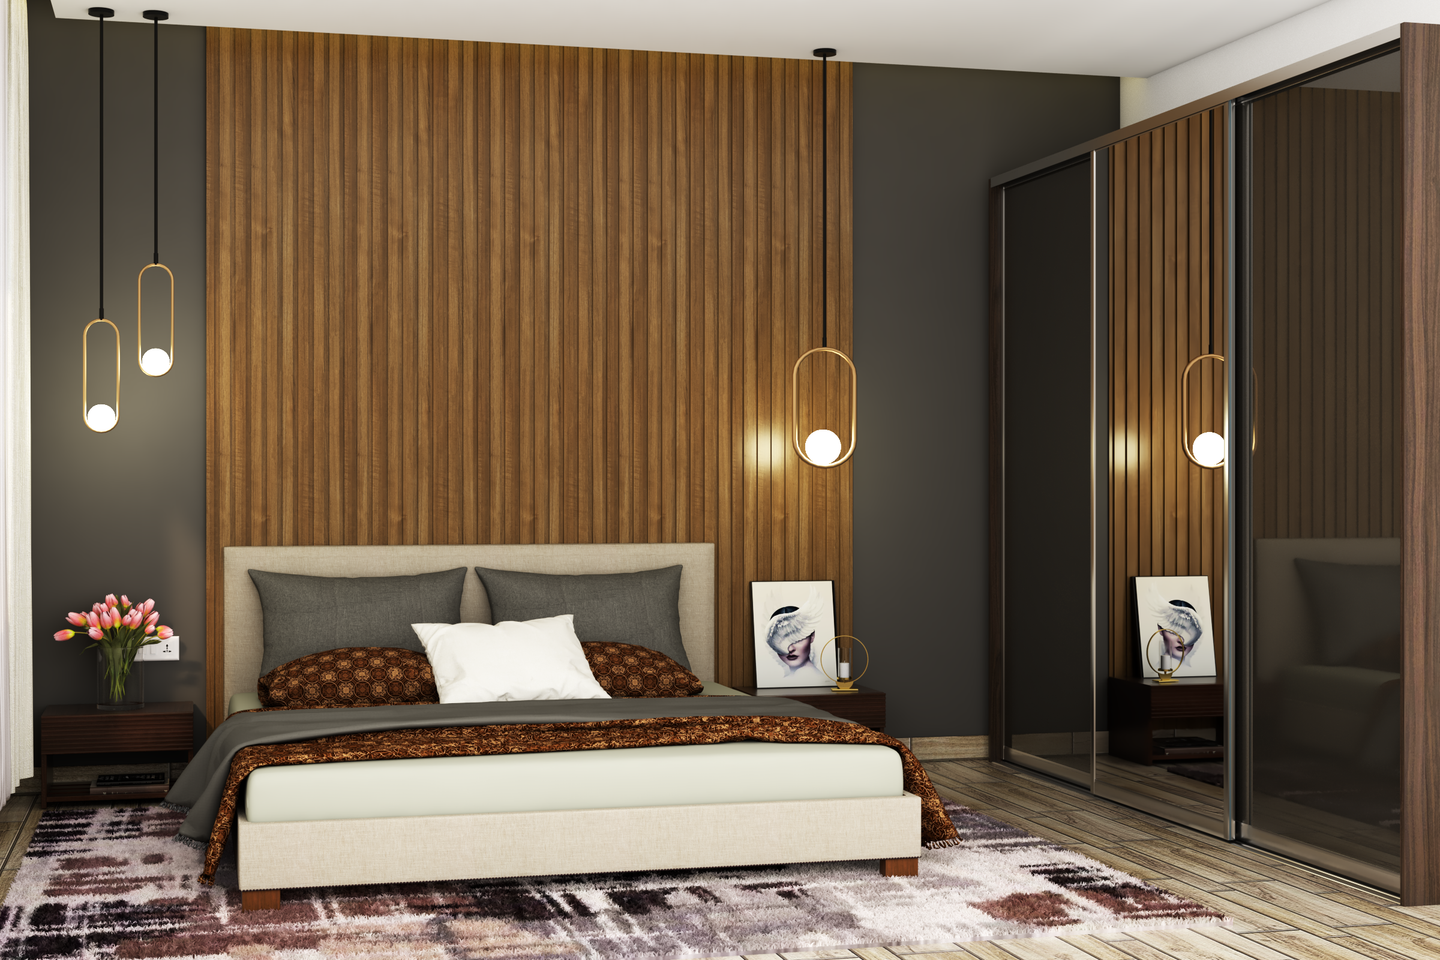 Modern Guest Bedroom With Multiple Hanging Lights - Livspace